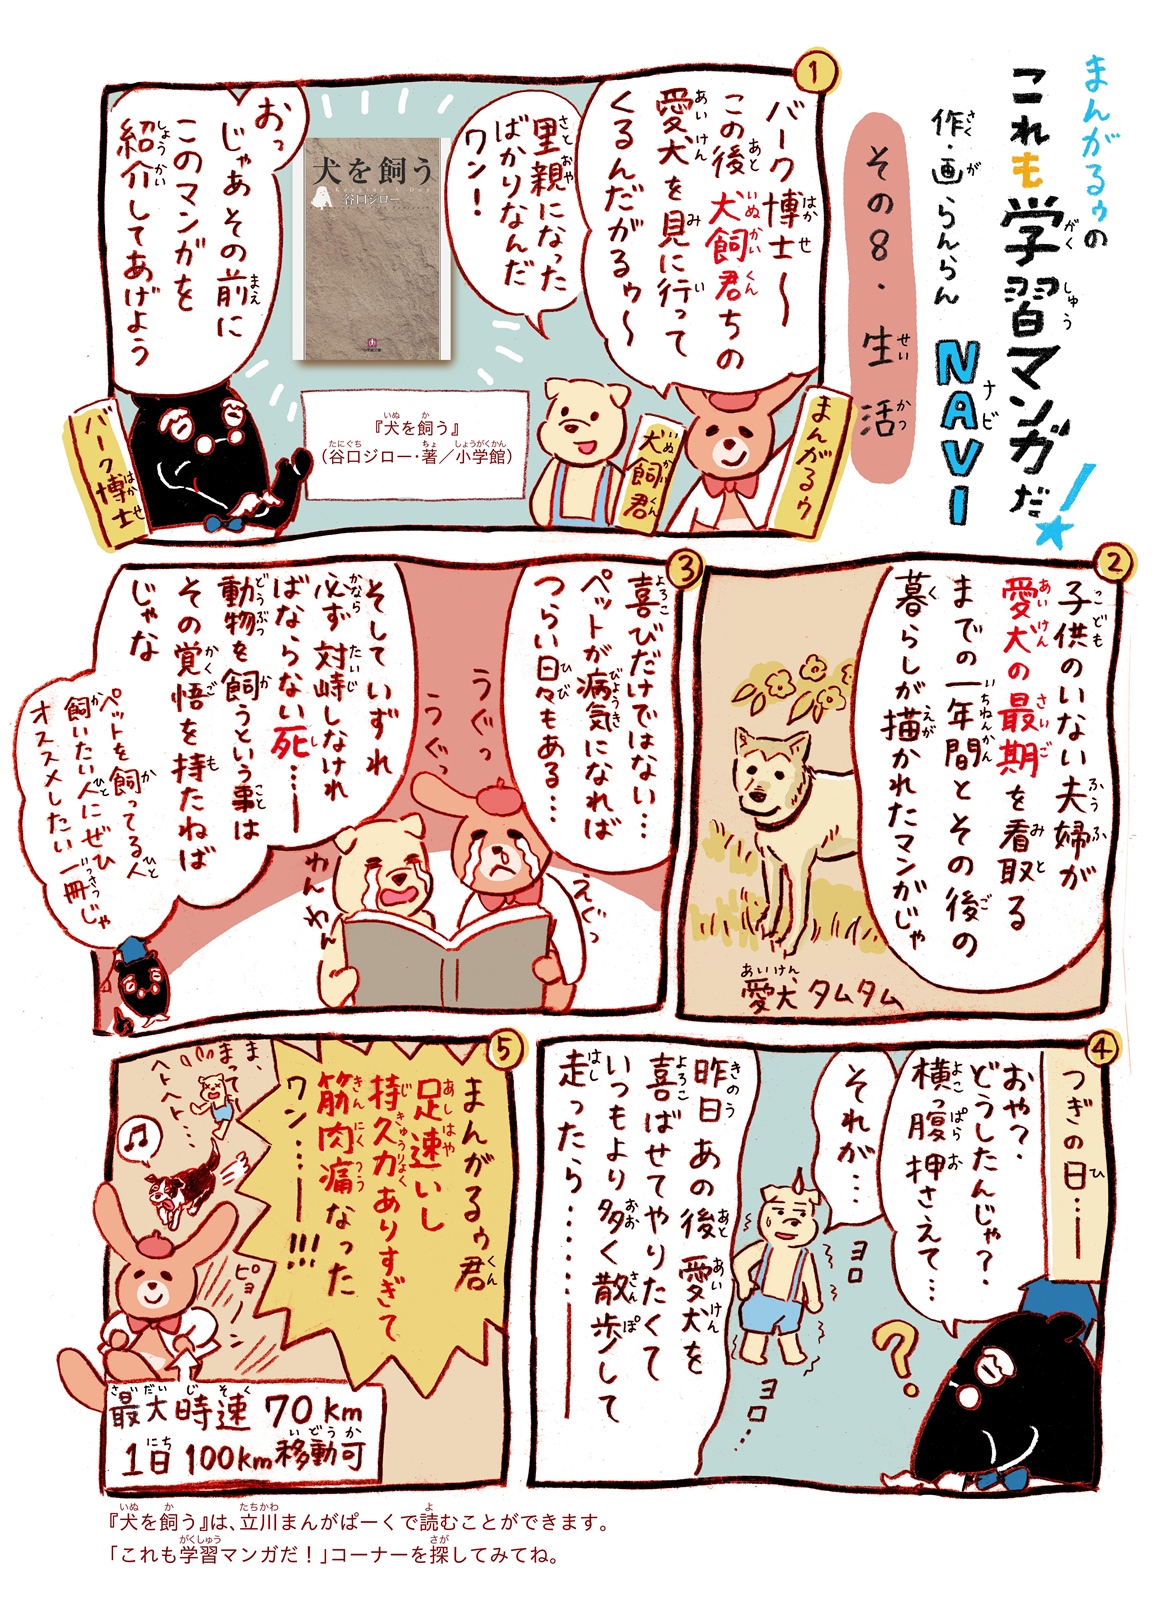 https://mangapark.jp/topics/2020/07/01/images/mangaloo_vol9.jpg